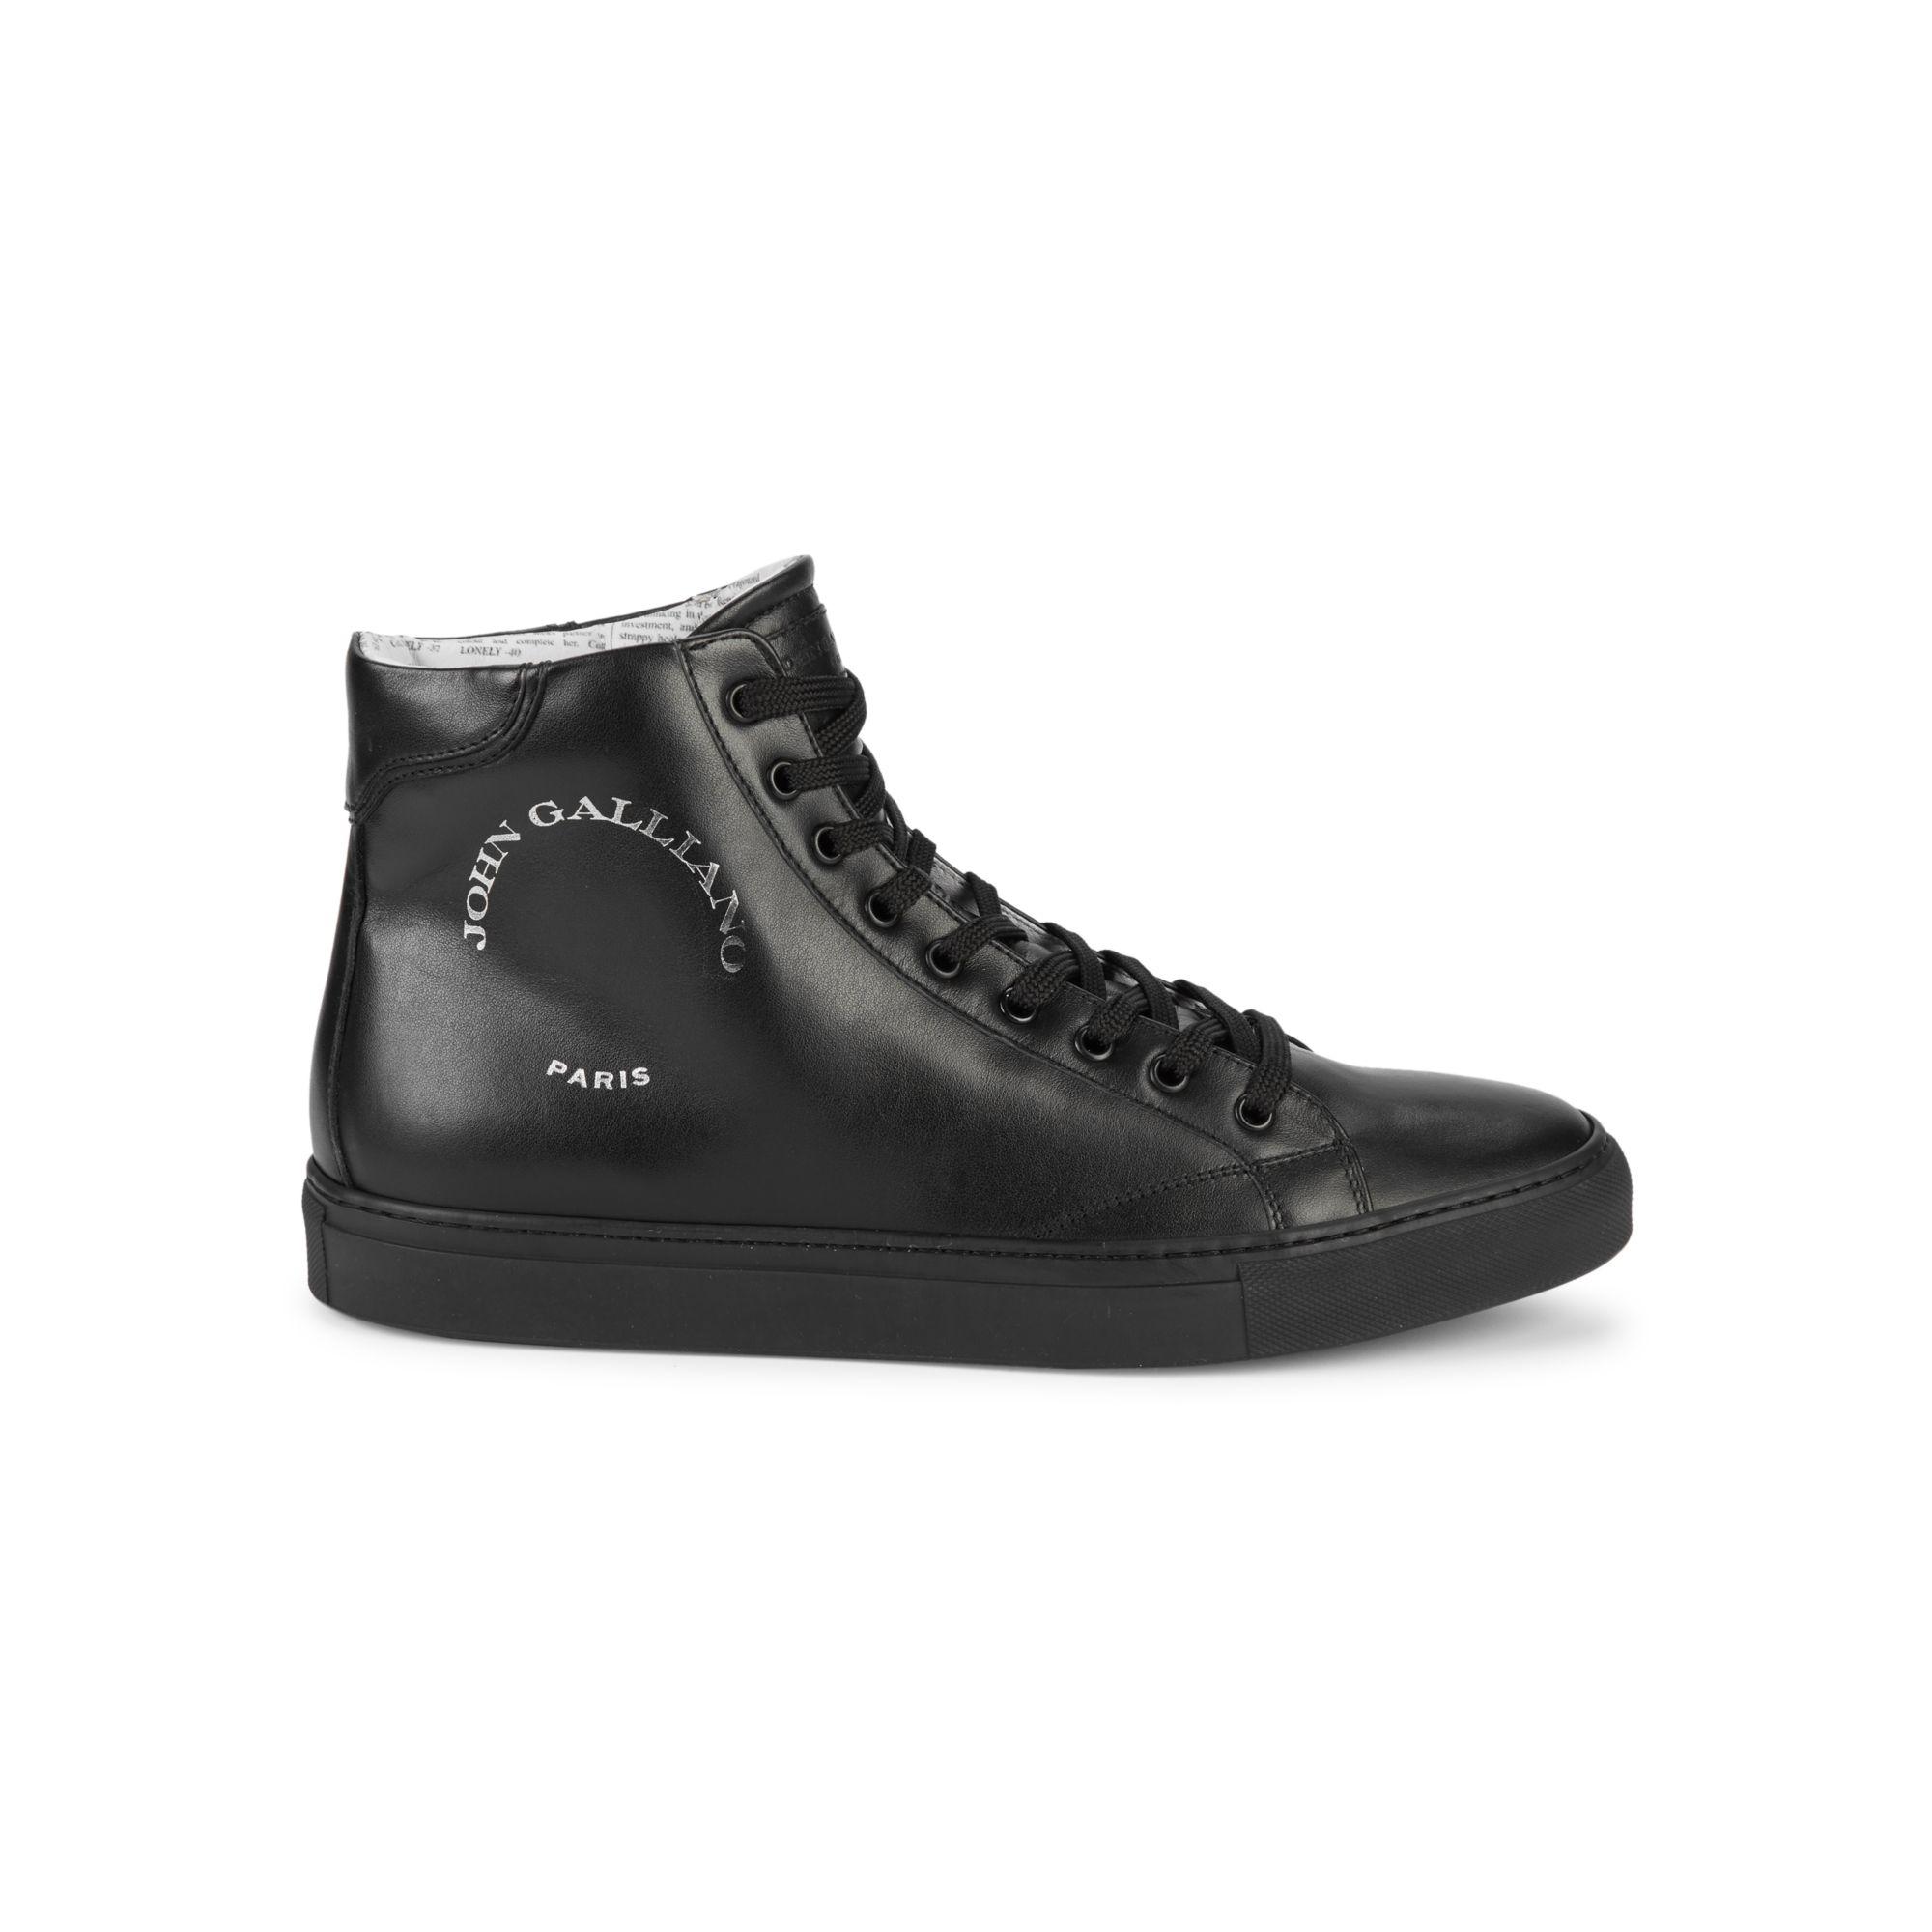 John Galliano Leather Fashion Sneakers for Women